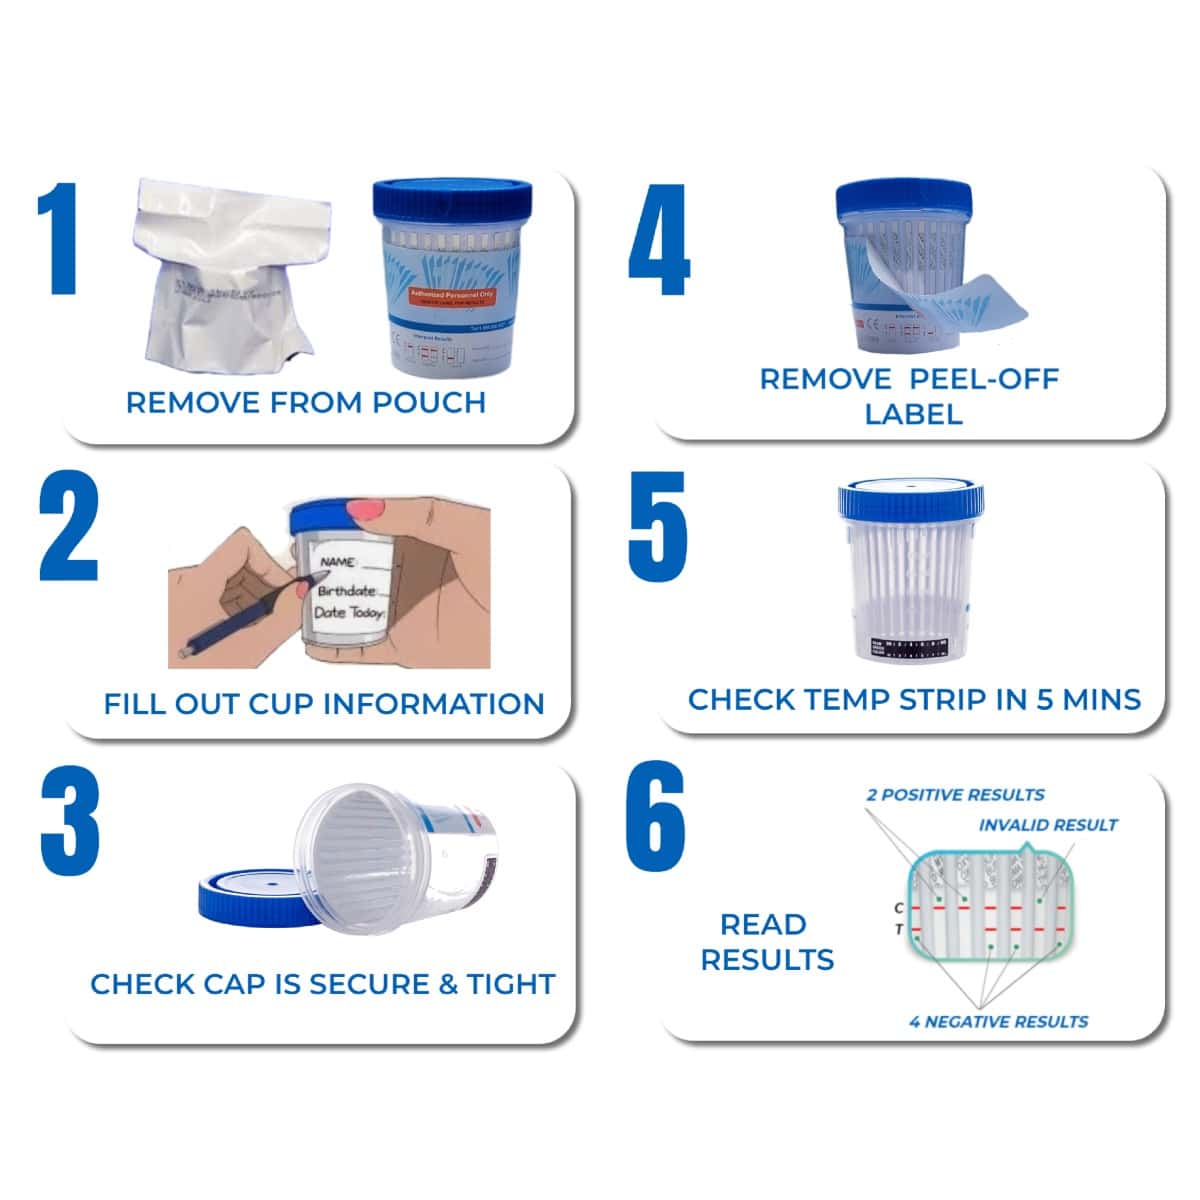 ovusmedical.com drug testing cup instructions